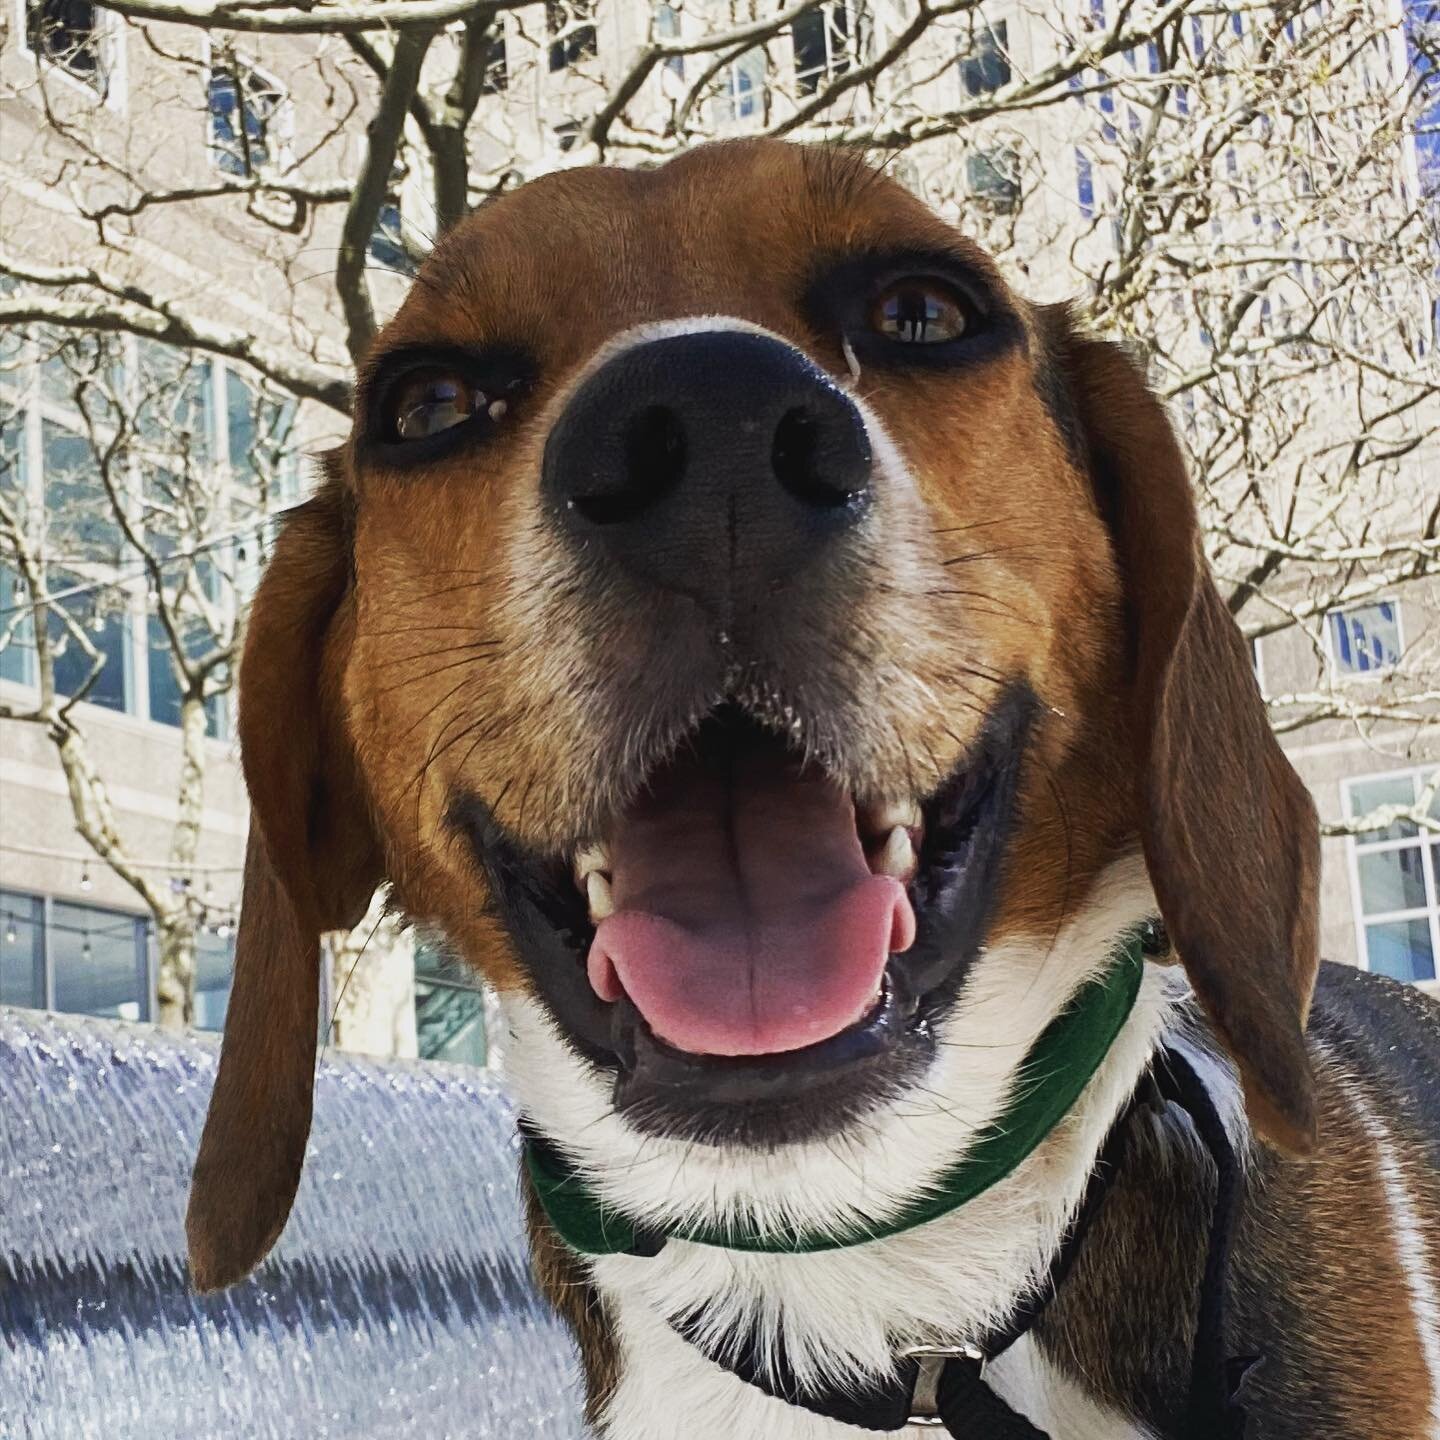 👅 ❤️🎉#tongueouttuesday 
.
.
#beagle #beaglesofinstagram #Dog #Dogs #Pet #Pets #instapet #instadog #nyc #newyorkcity #dogsofnyc
#dogsofinstagram #Dogstagram #PetsofInstagram #petstagram #cutepetsofig #woof
#petsofig #dogsofIG #bestfriends #lowermanh